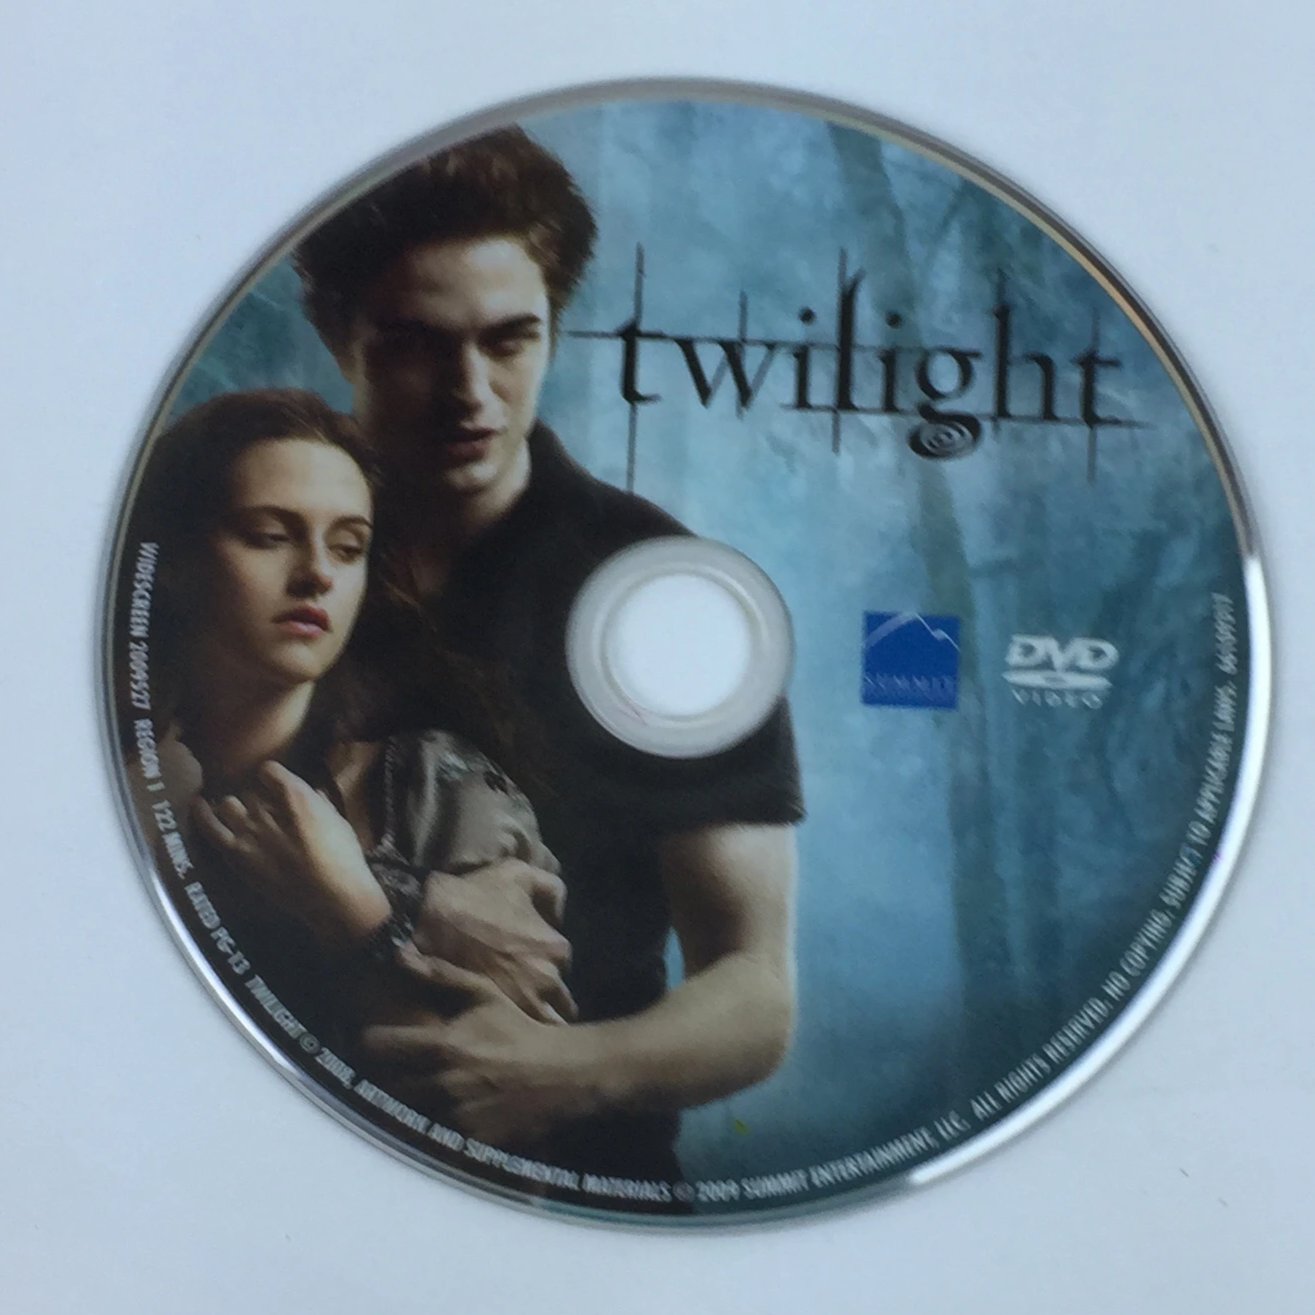 Twilight (DVD, 2009) Kristen Stewart, Robert Pattinson - DISC ONLY